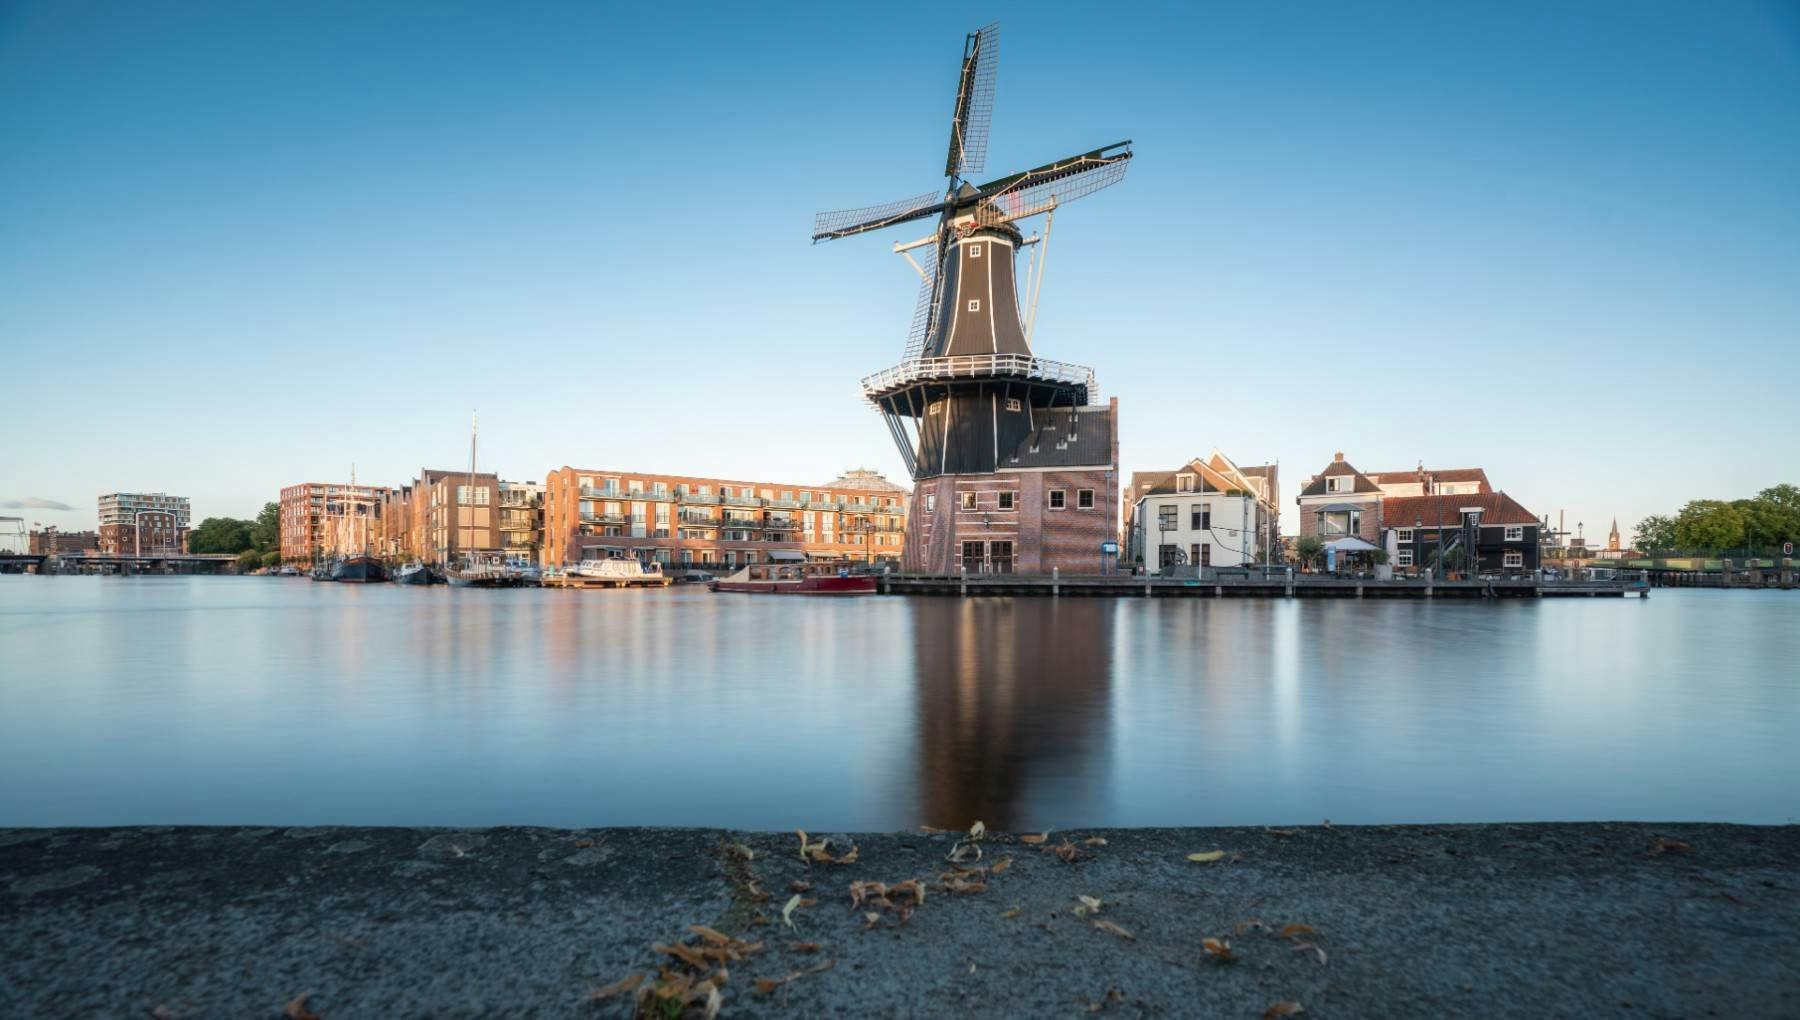 Windmill in Haarlem